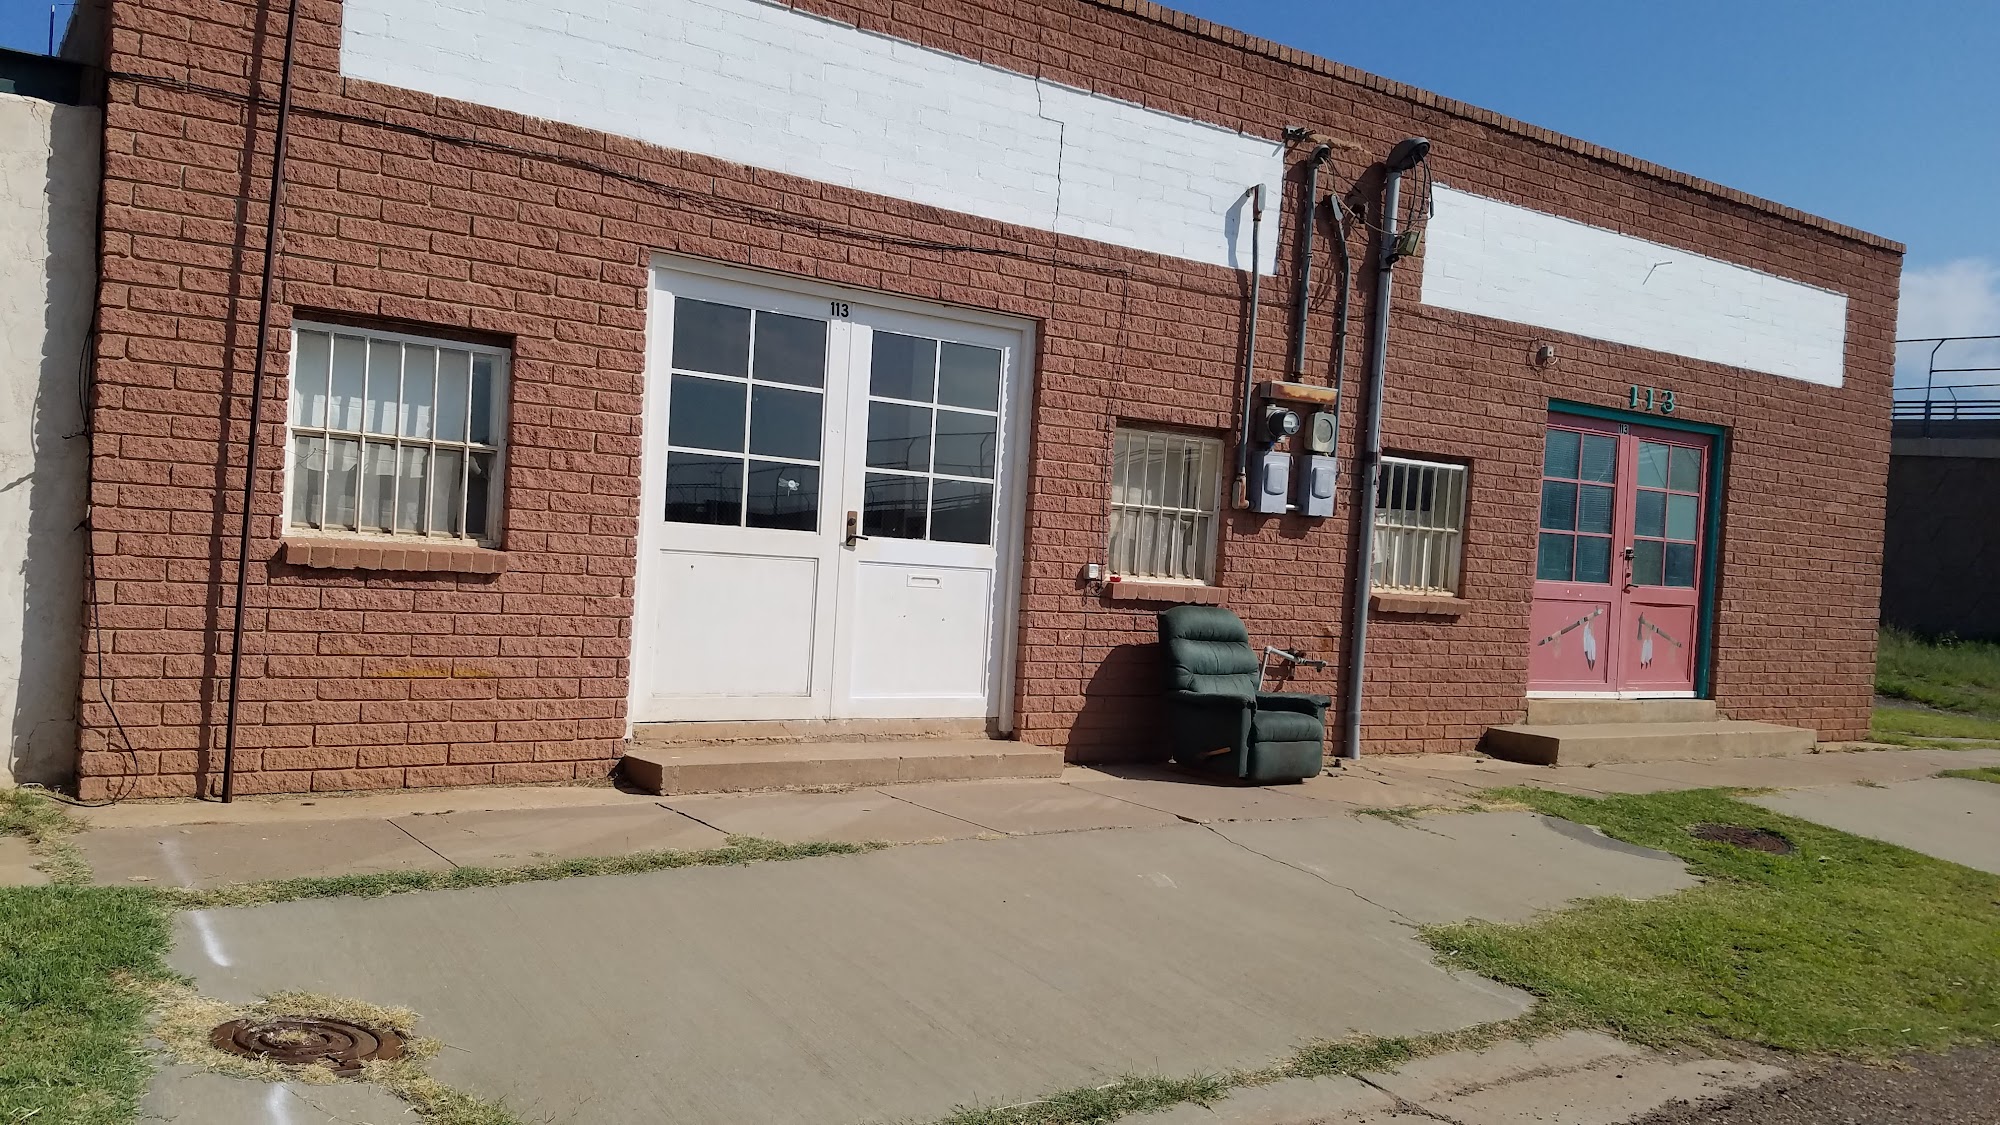 Tucumcari MainStreet Historic Railroad Depot, 100 W Railroad Ave, Tucumcari New Mexico 88401